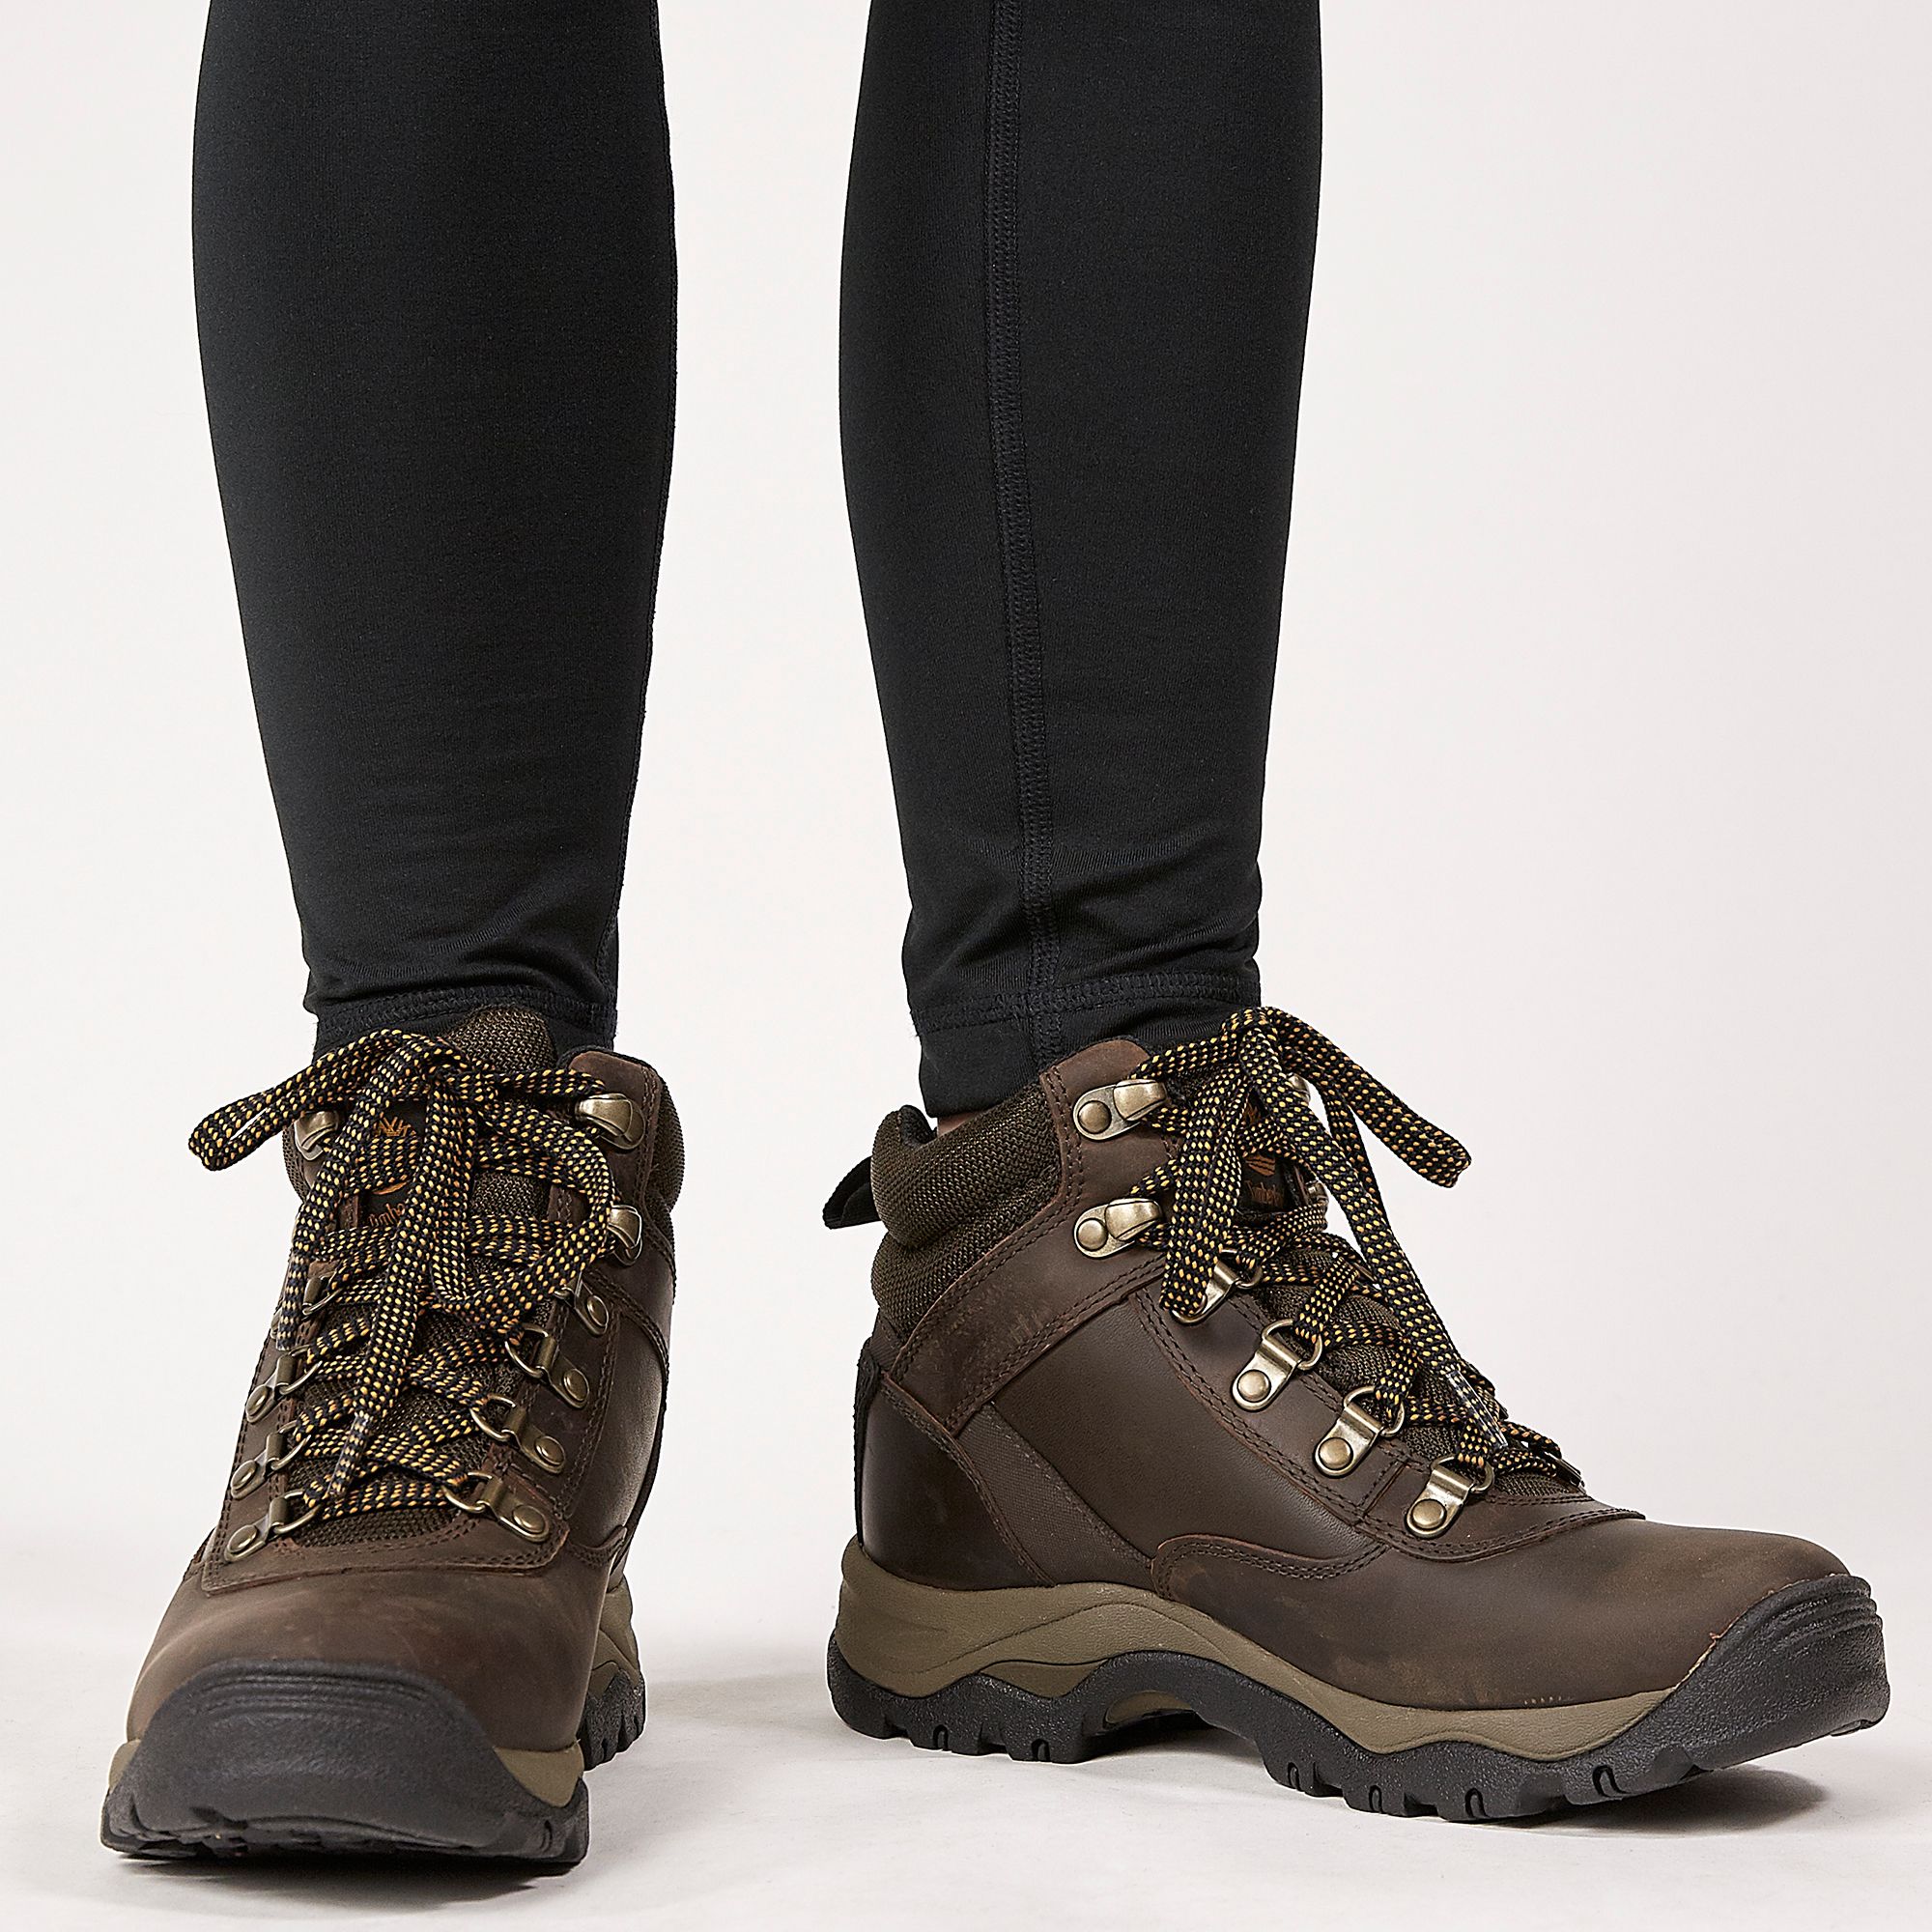 timberland women's keele ridge wp leather mid winter boot